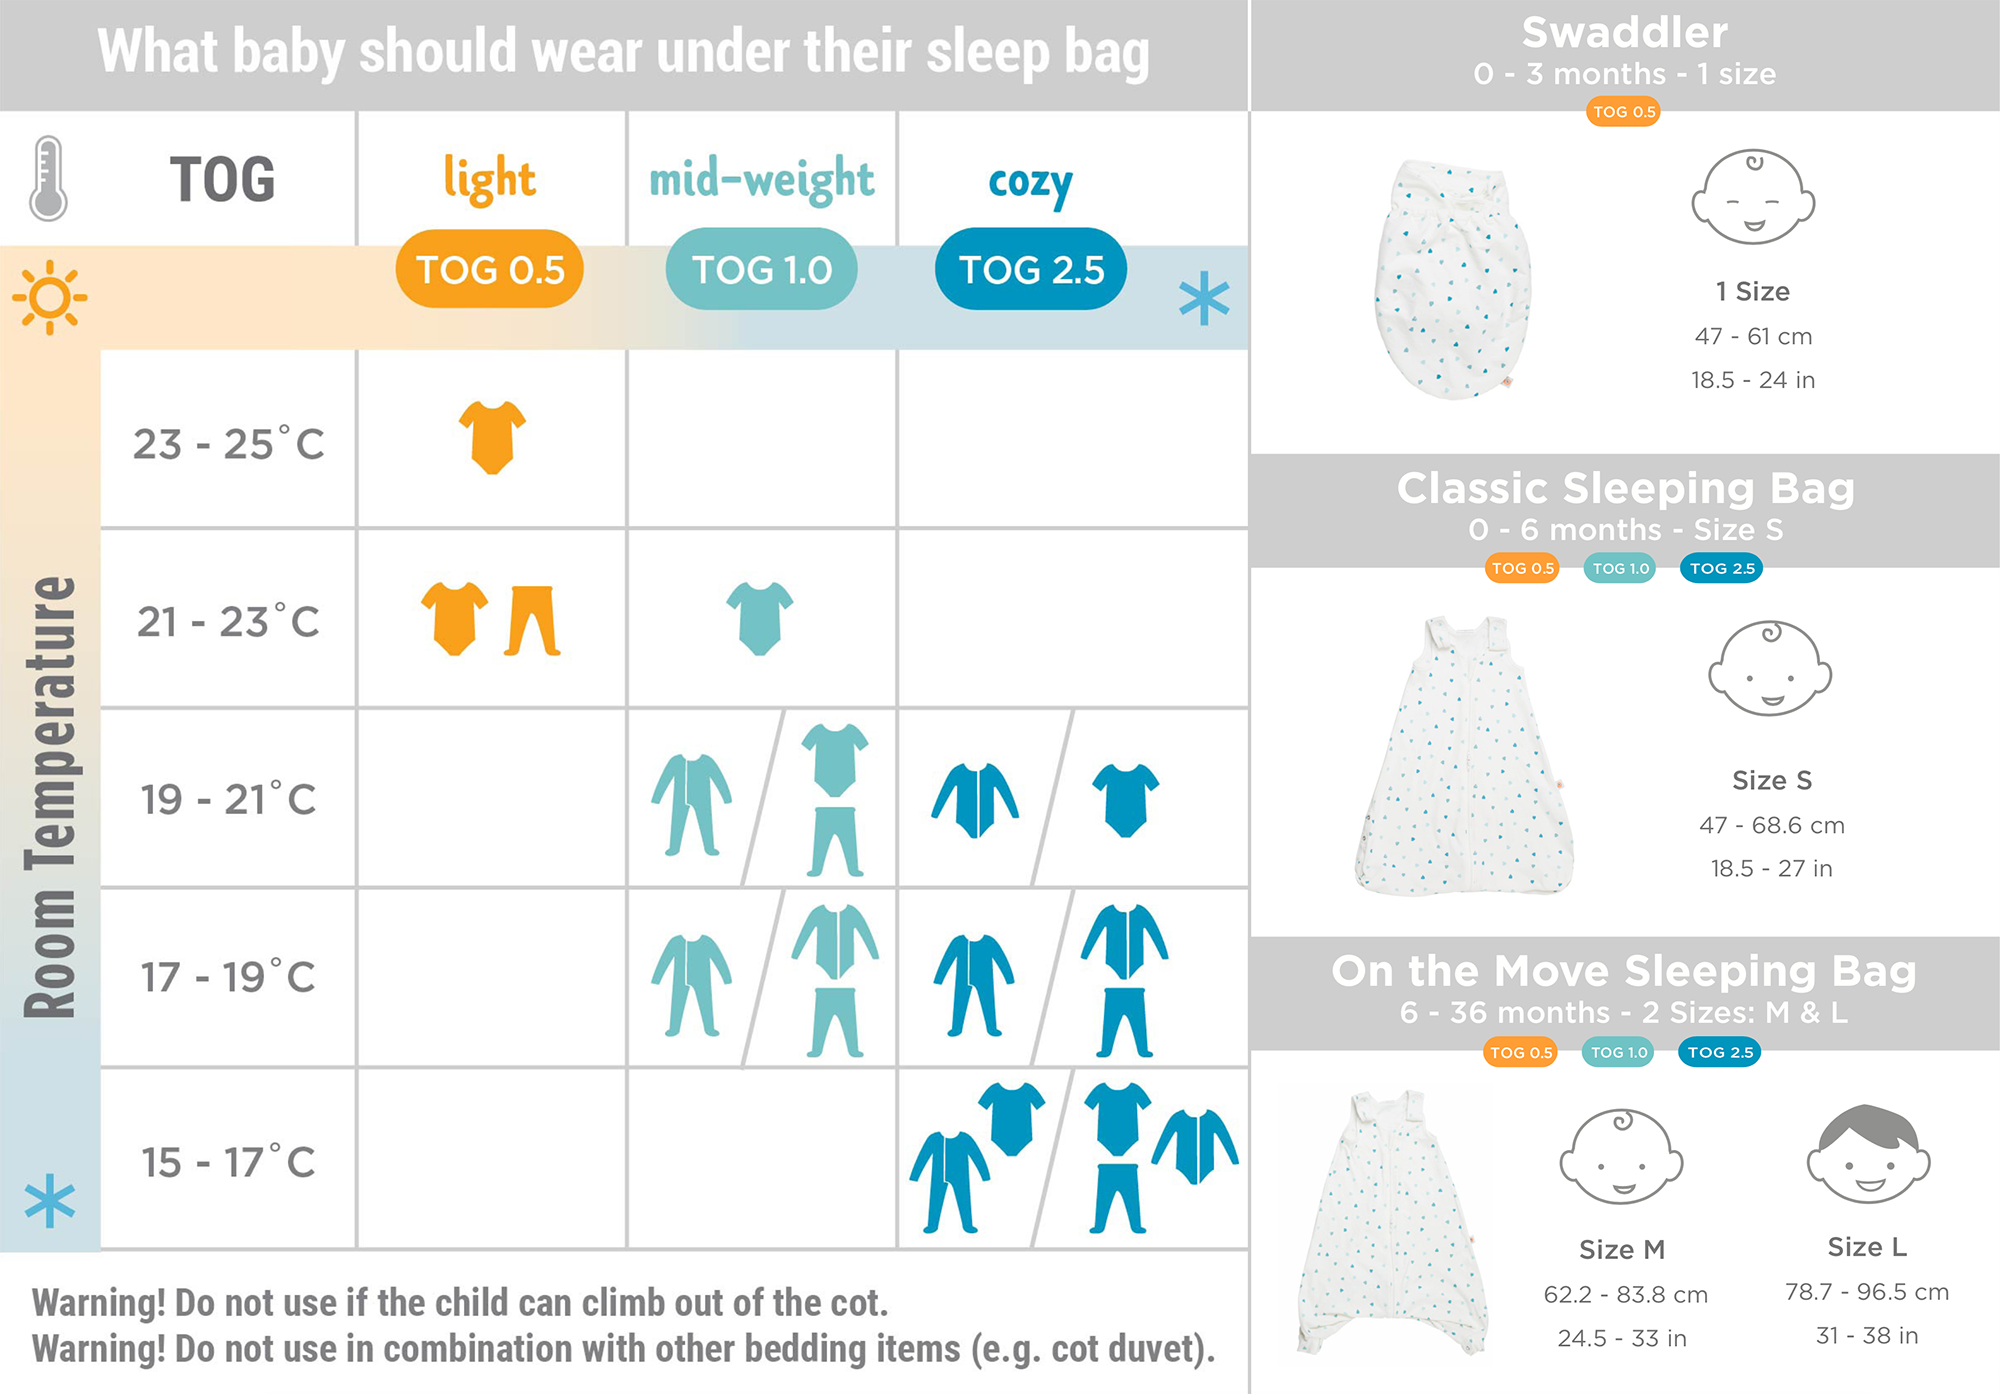 how to dress newborn for sleep